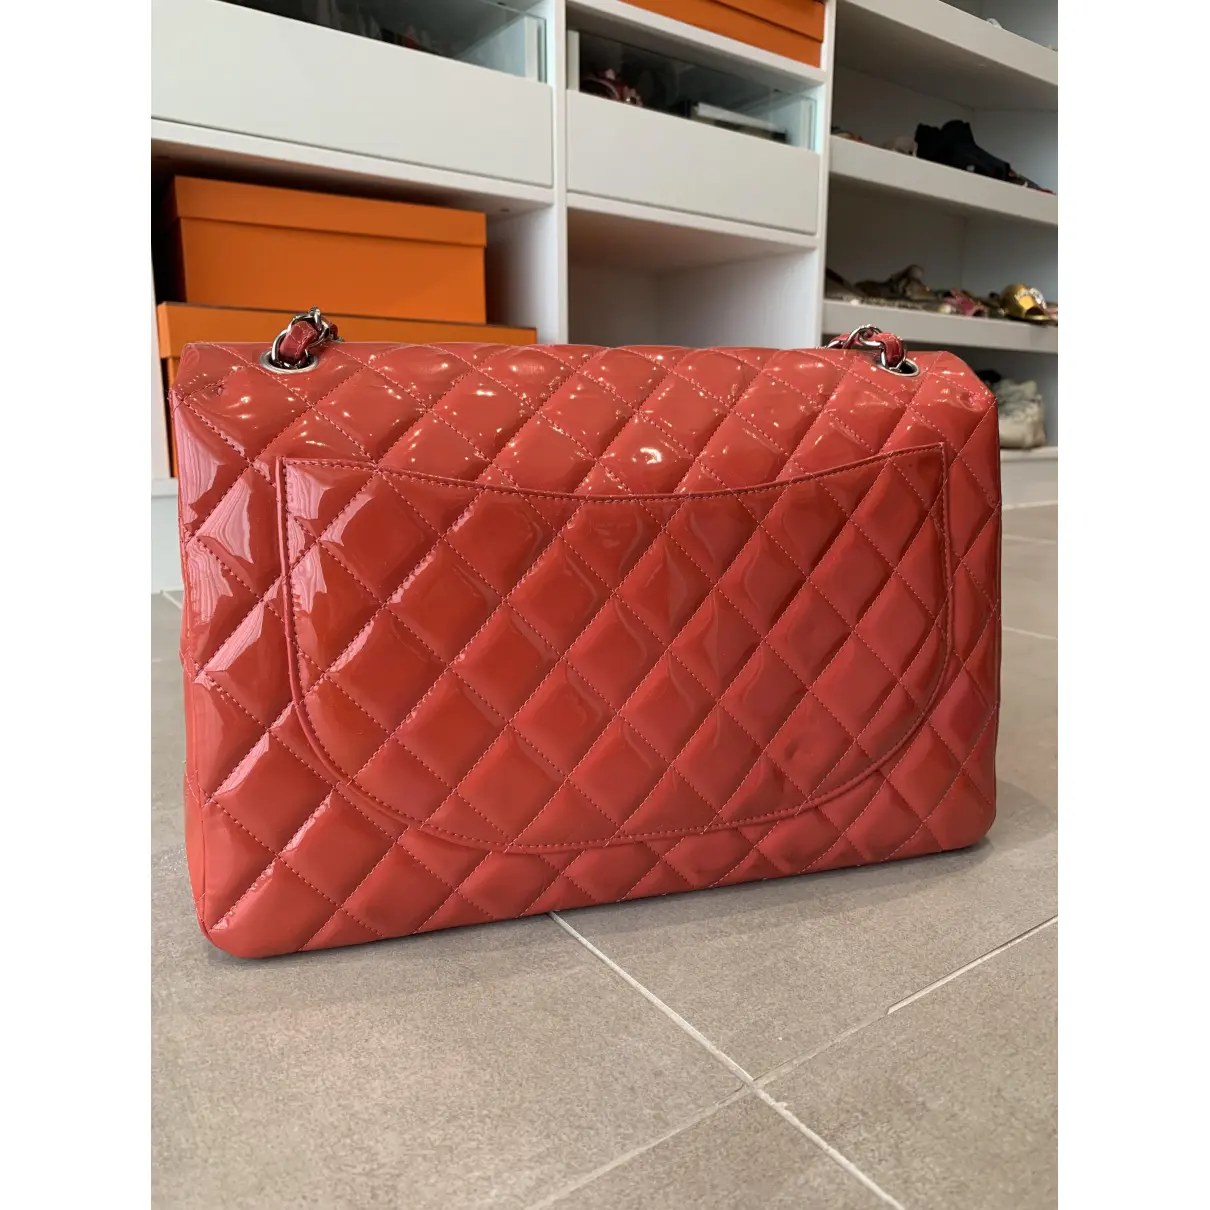 Buy Chanel Timeless/Classique patent leather handbag online